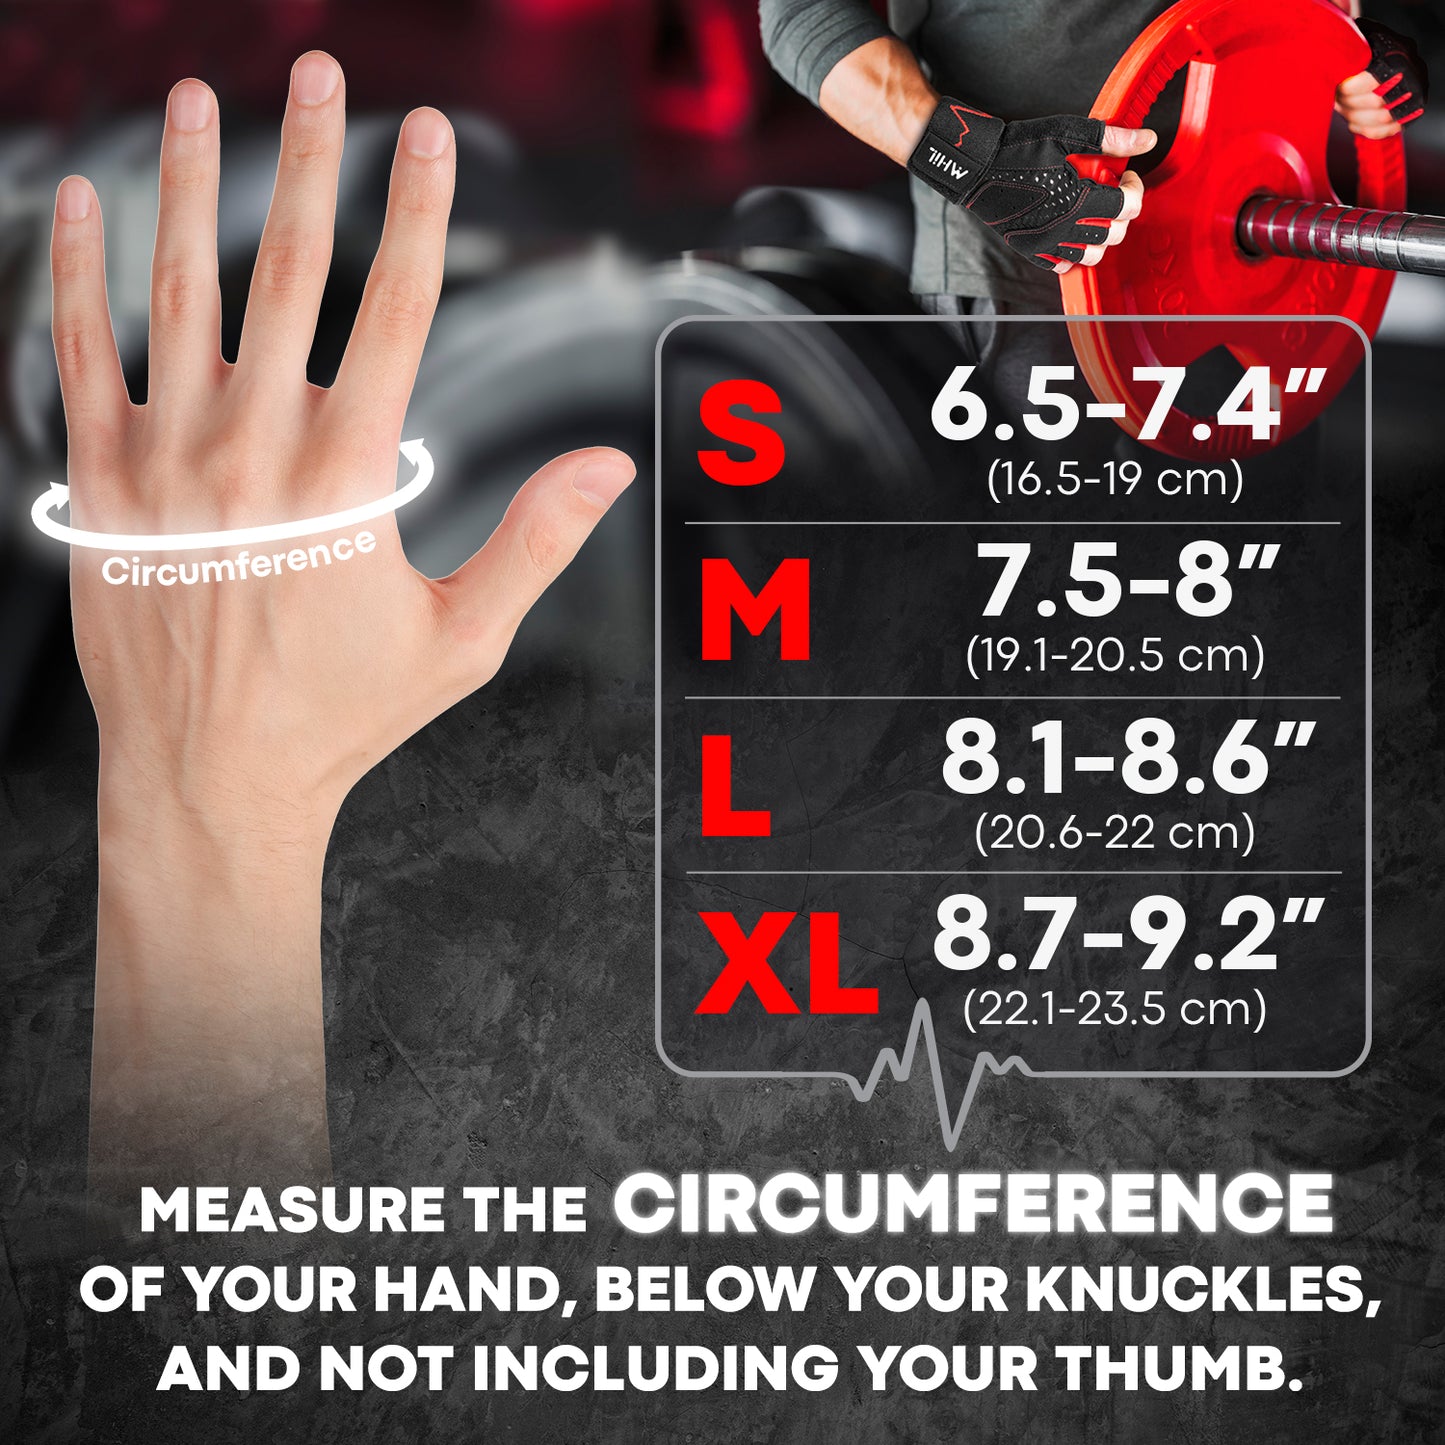 MHIL Workout Gloves Mens & Women's